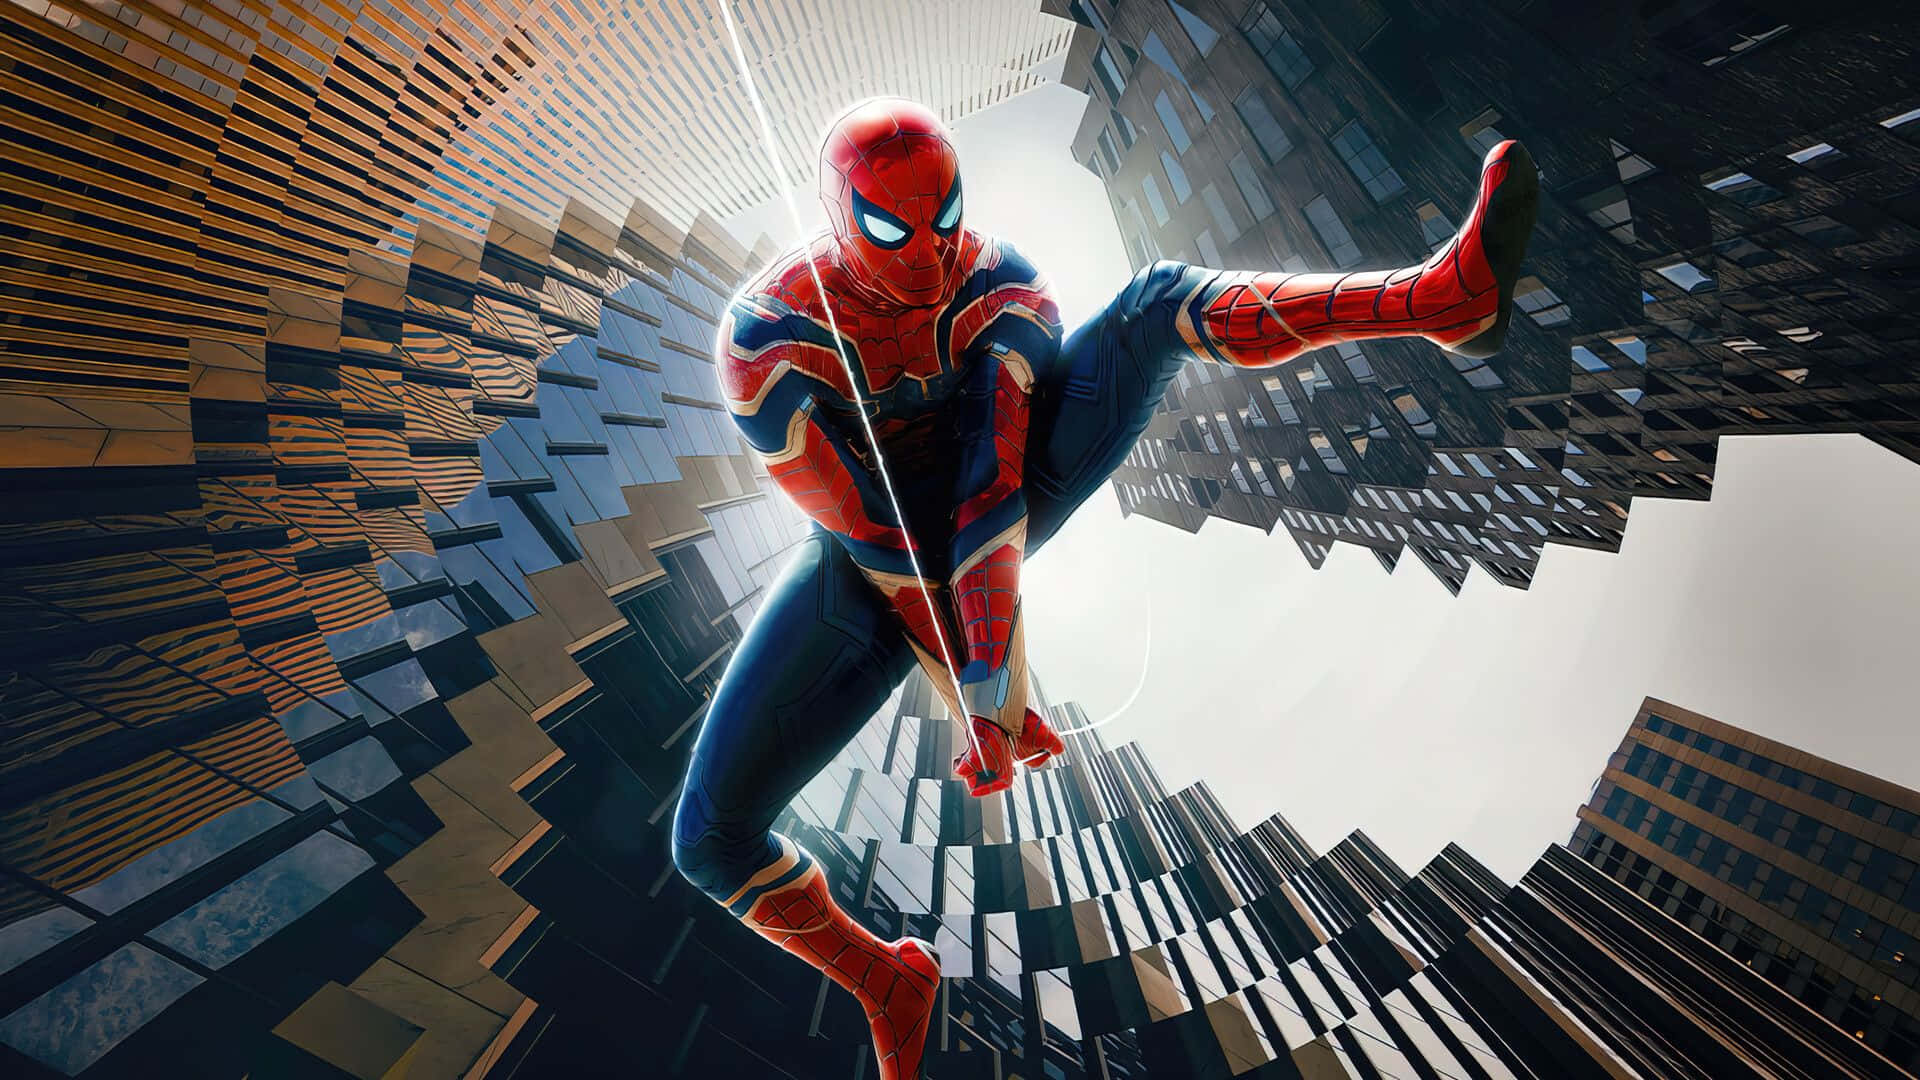 Free Spider Man Cool Wallpaper Downloads, [100+] Spider Man Cool Wallpapers  for FREE 